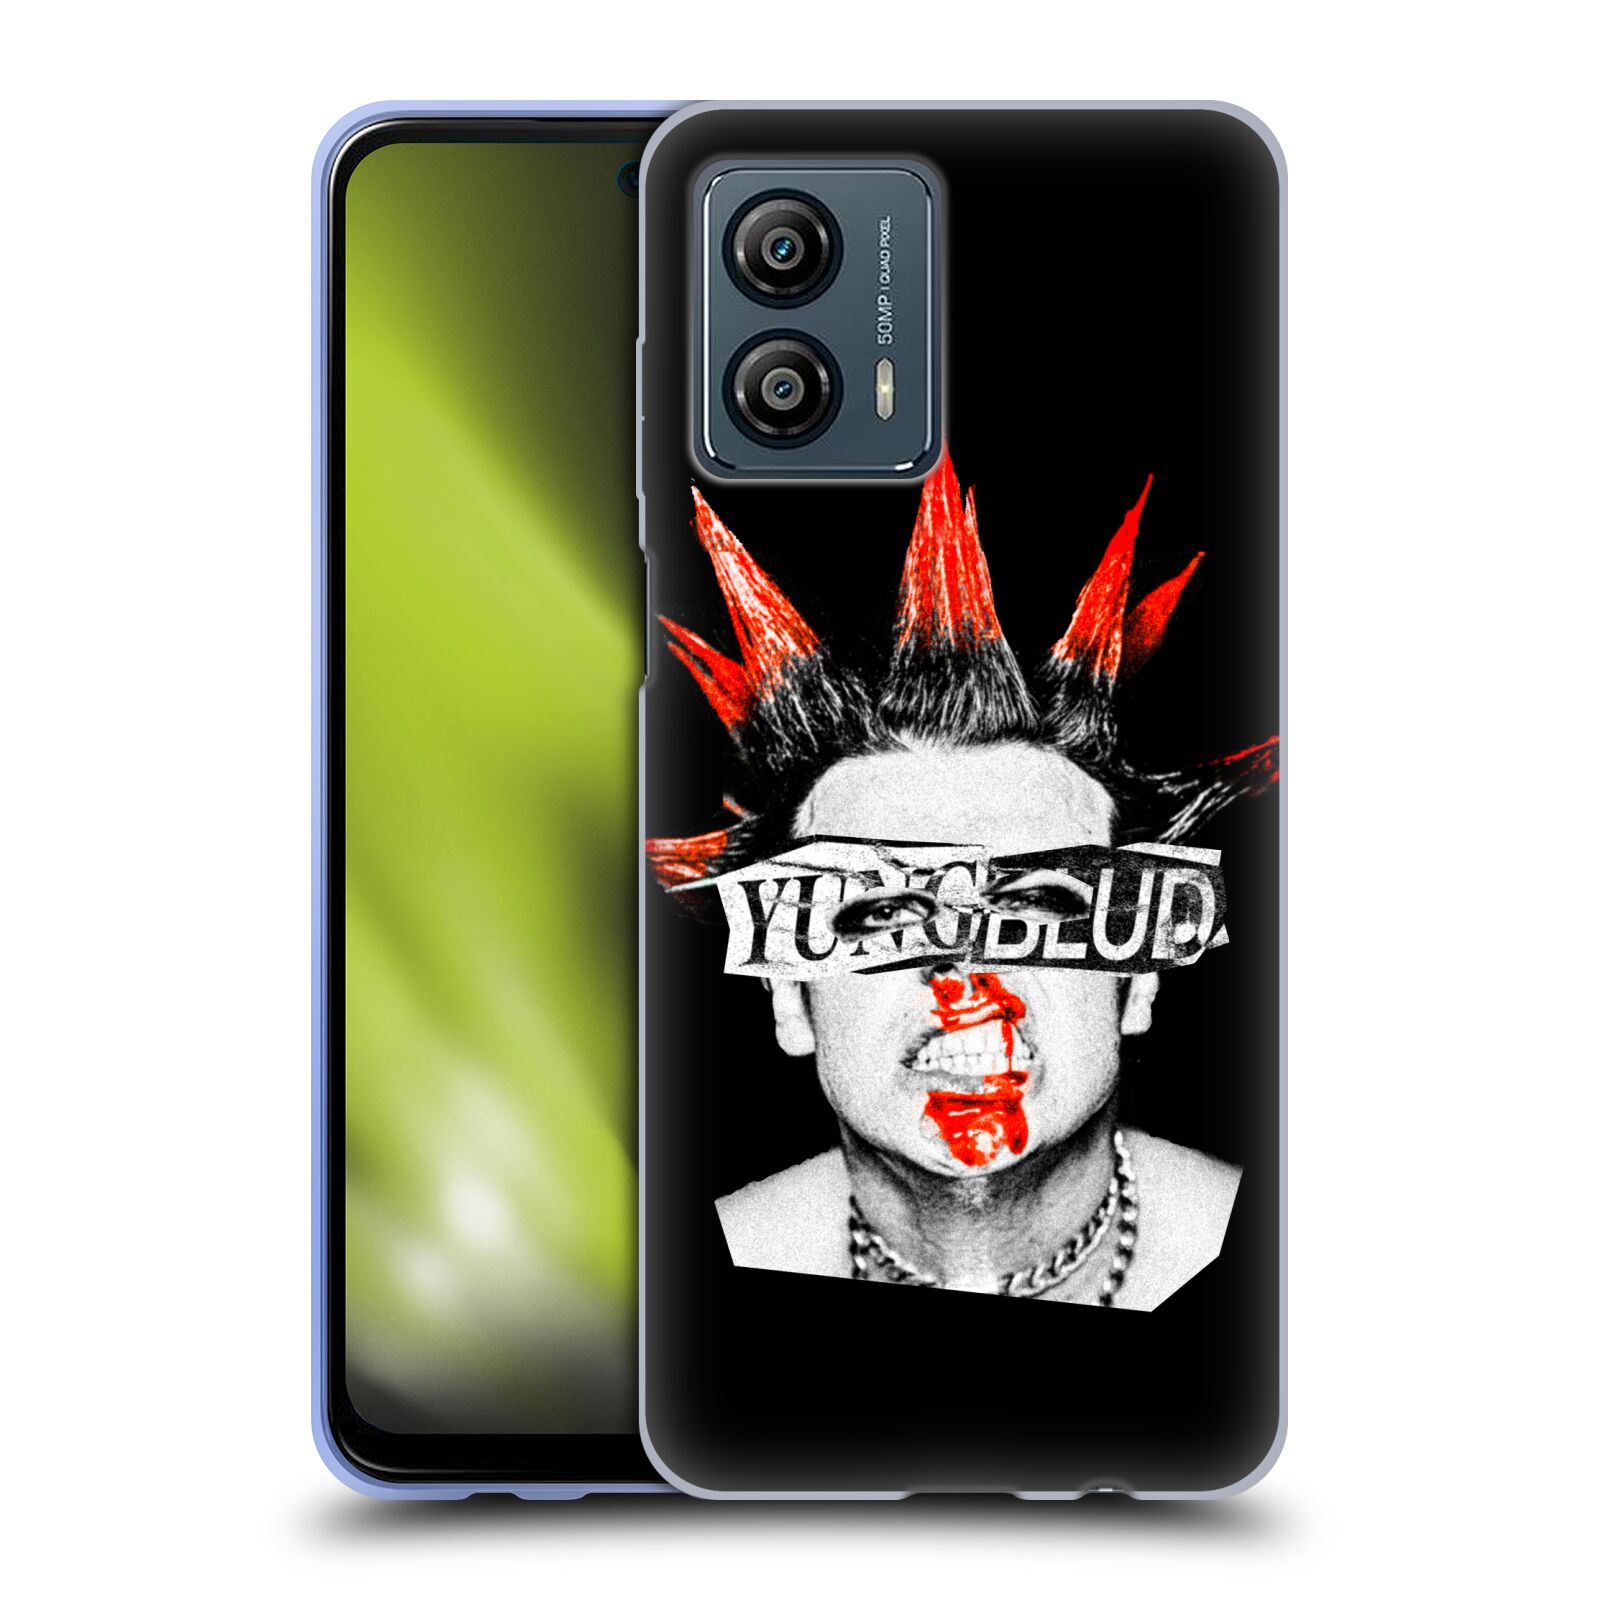 Silikonové pouzdro na mobil Motorola Moto G53 5G - Yungblud - Graphics Face (Silikonový kryt, obal, pouzdro na mobilní telefon Motorola Moto G53 5G s licencovaným motivem Yungblud - Graphics Face)